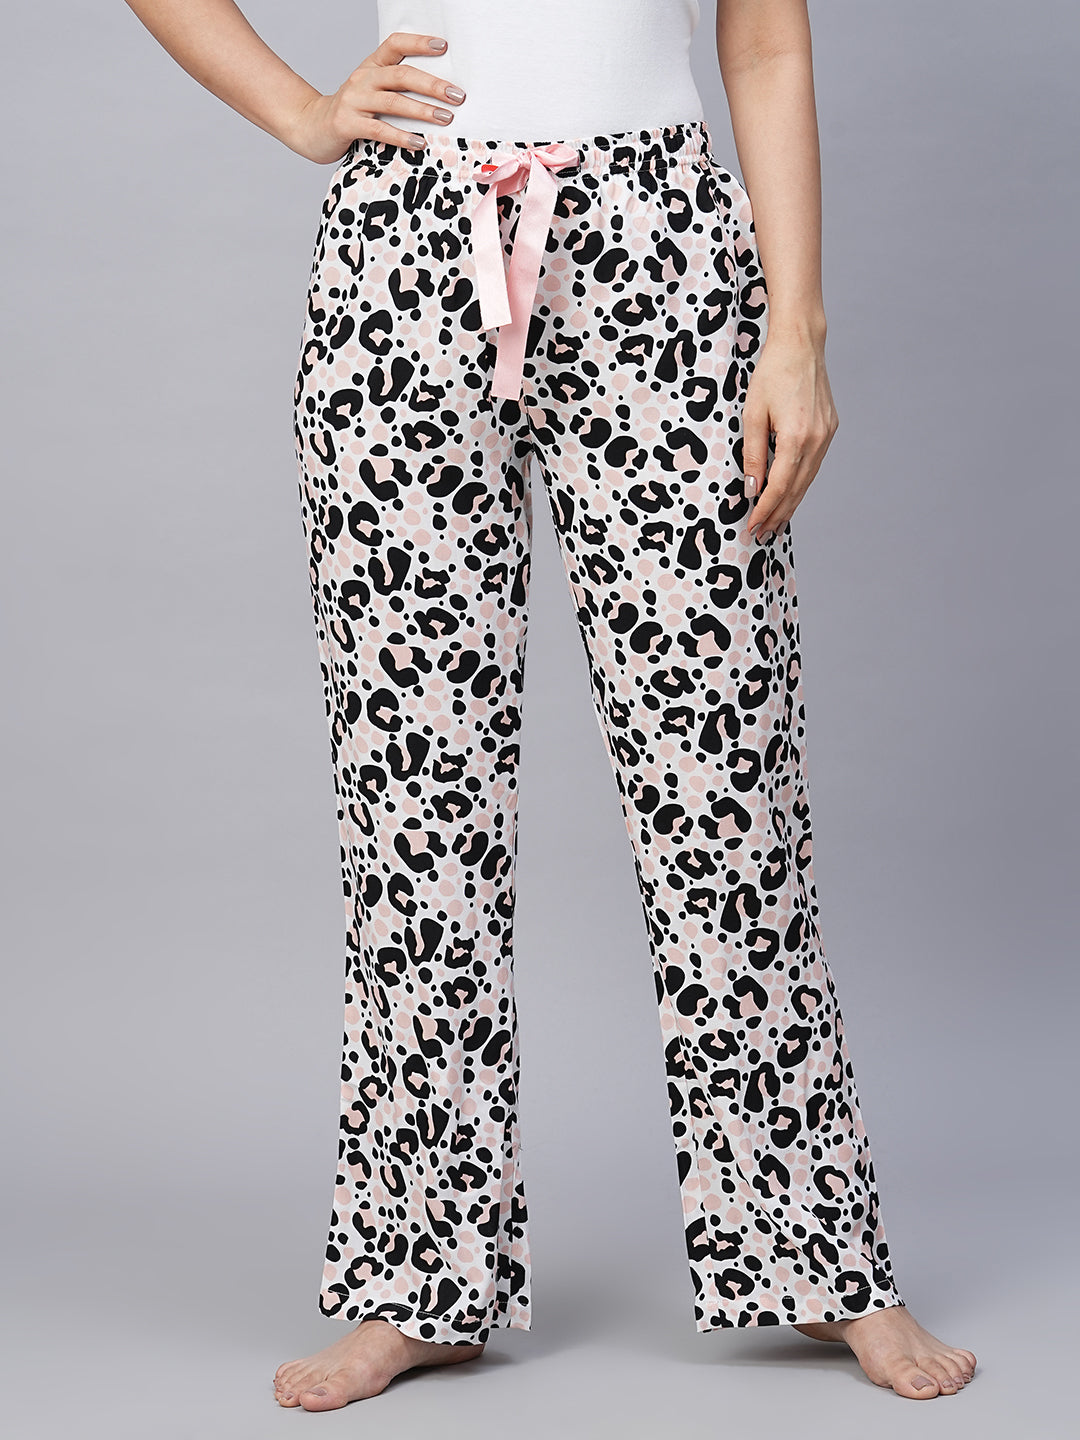 Comfortable women pajama pants wholesale In Various Designs